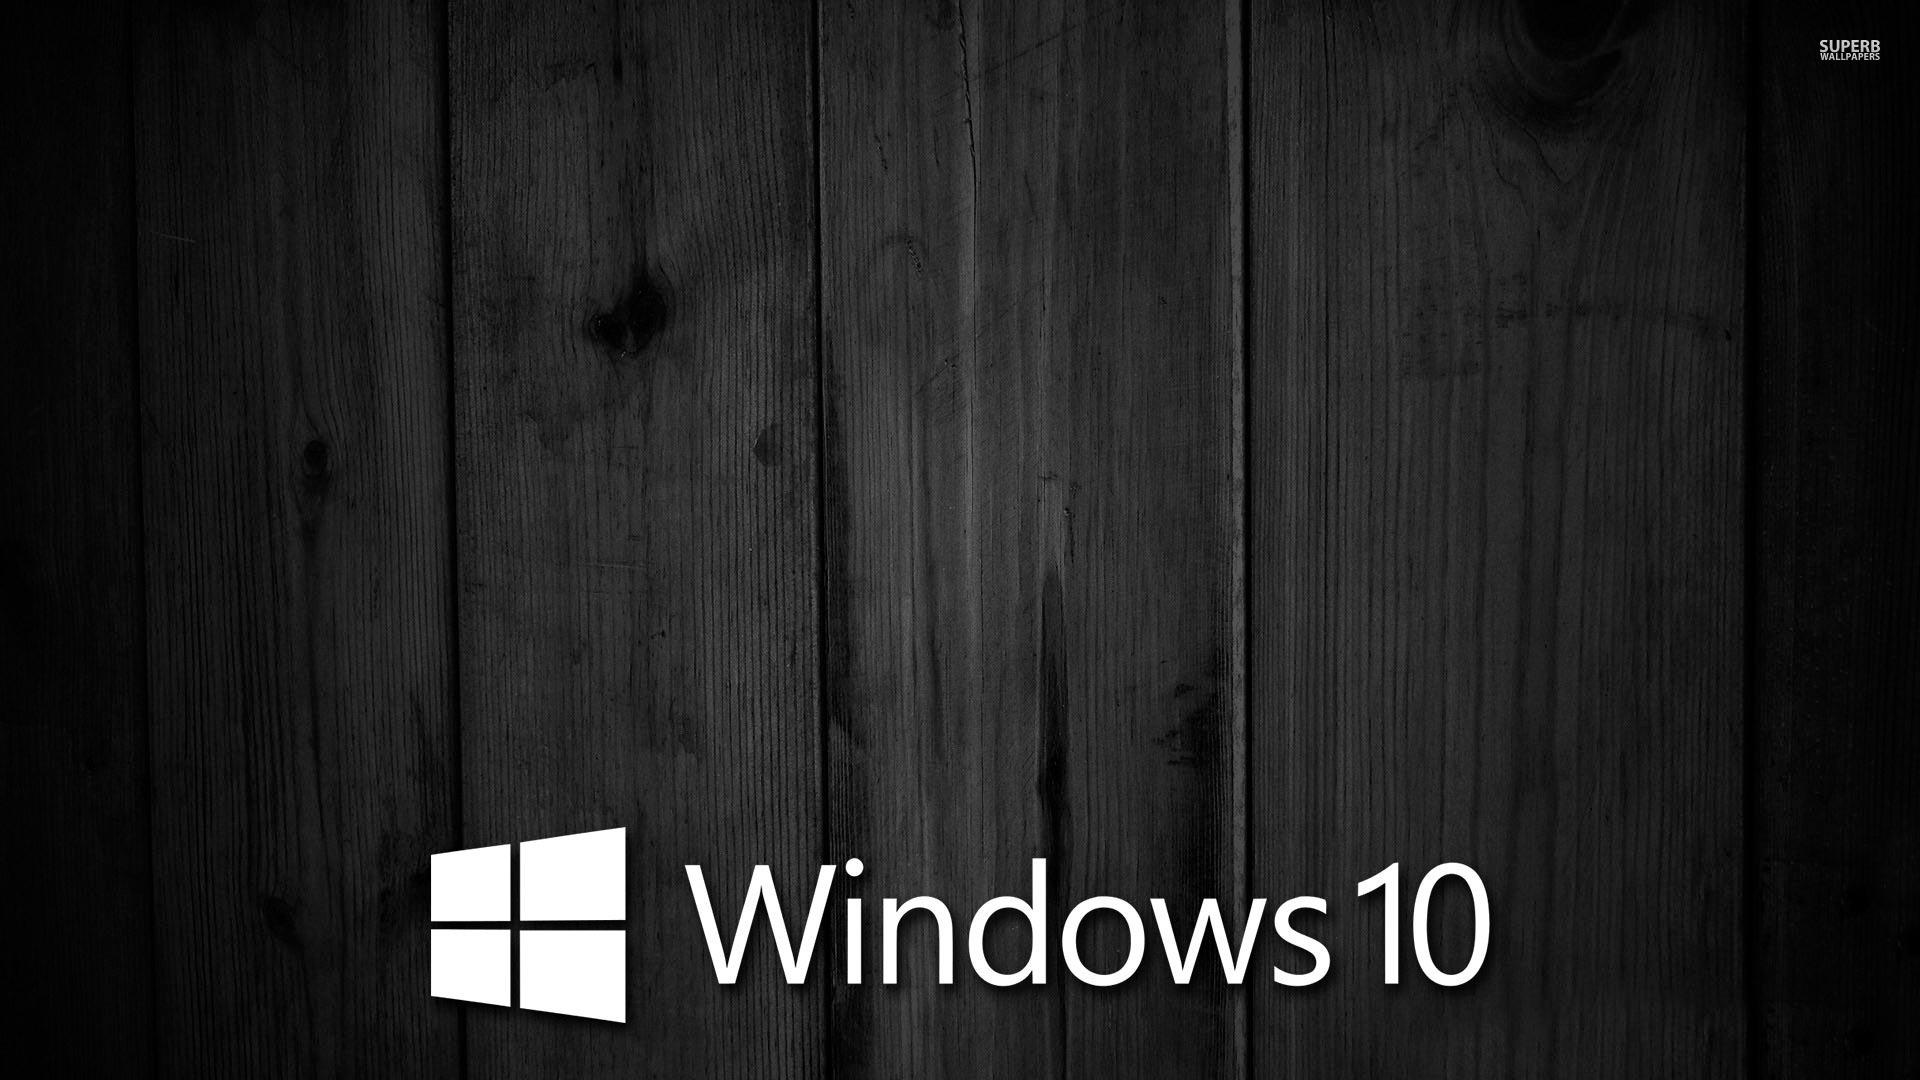  Windows  10  Wallpaper  HD  3D For Desktop Black  3 